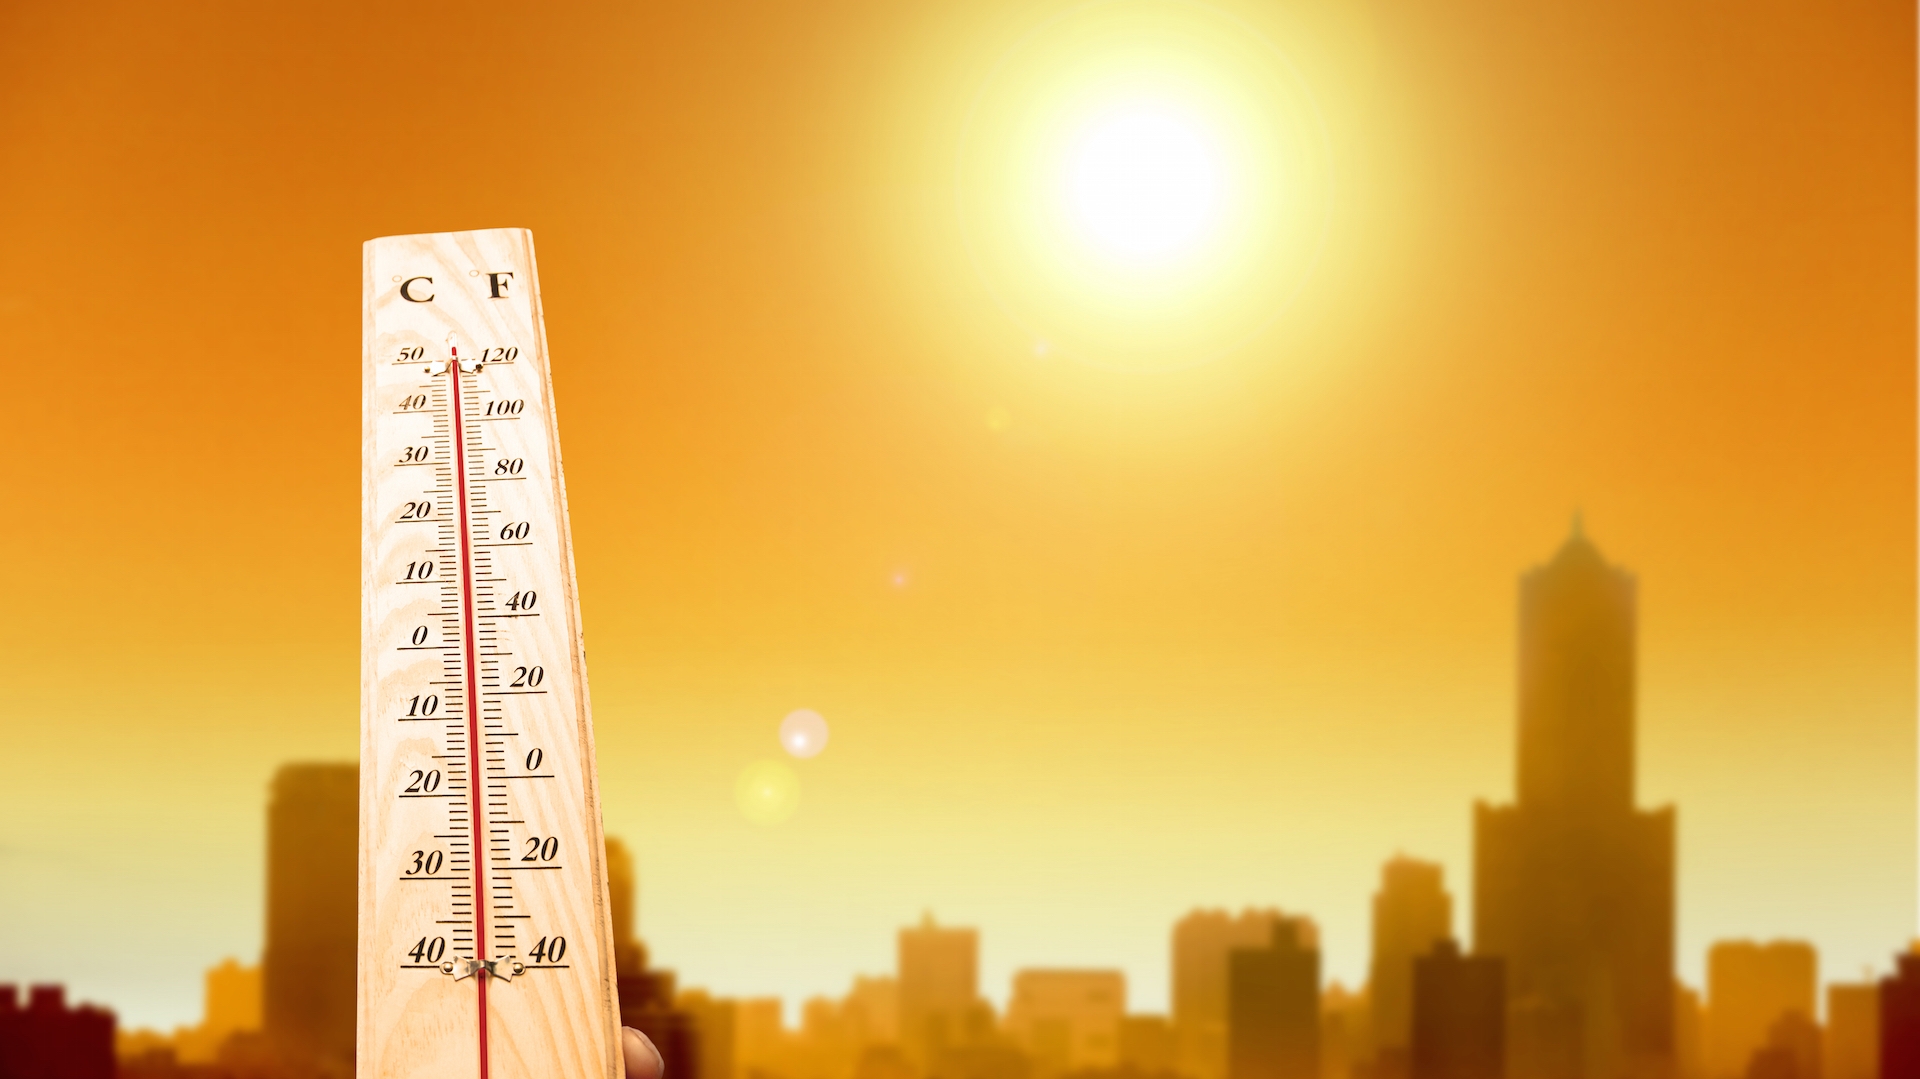 Temperaturas elevadas no Brasil: confira 7 dicas para evitar problemas no calor Lorena Bueri